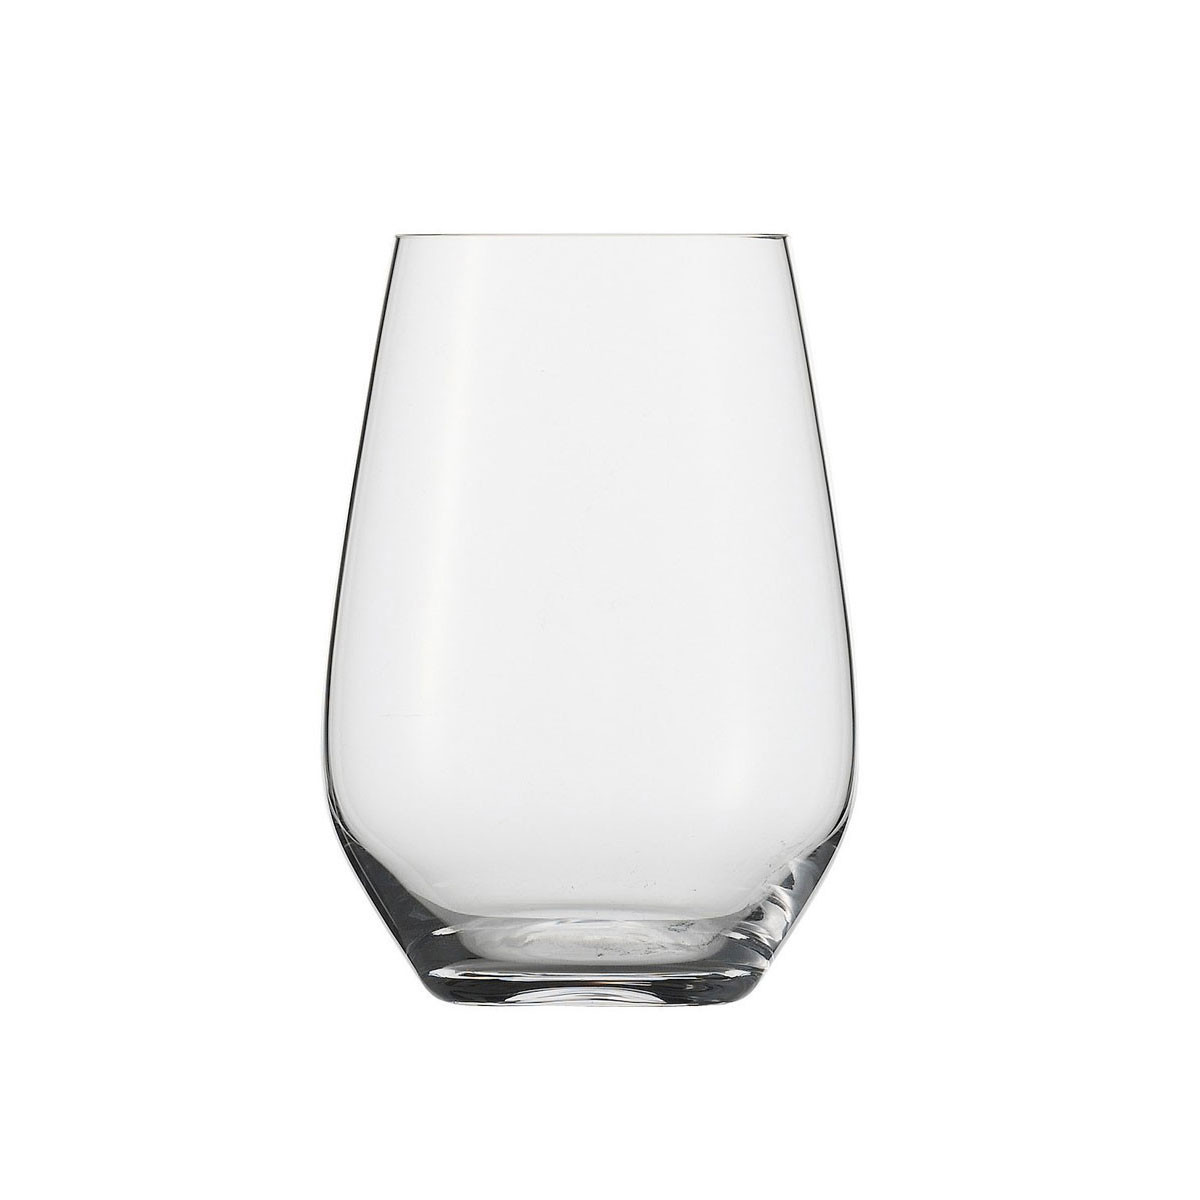 Schott Zwiesel Tritan Crystal, Forte All Purpose Stemless Glass, Single